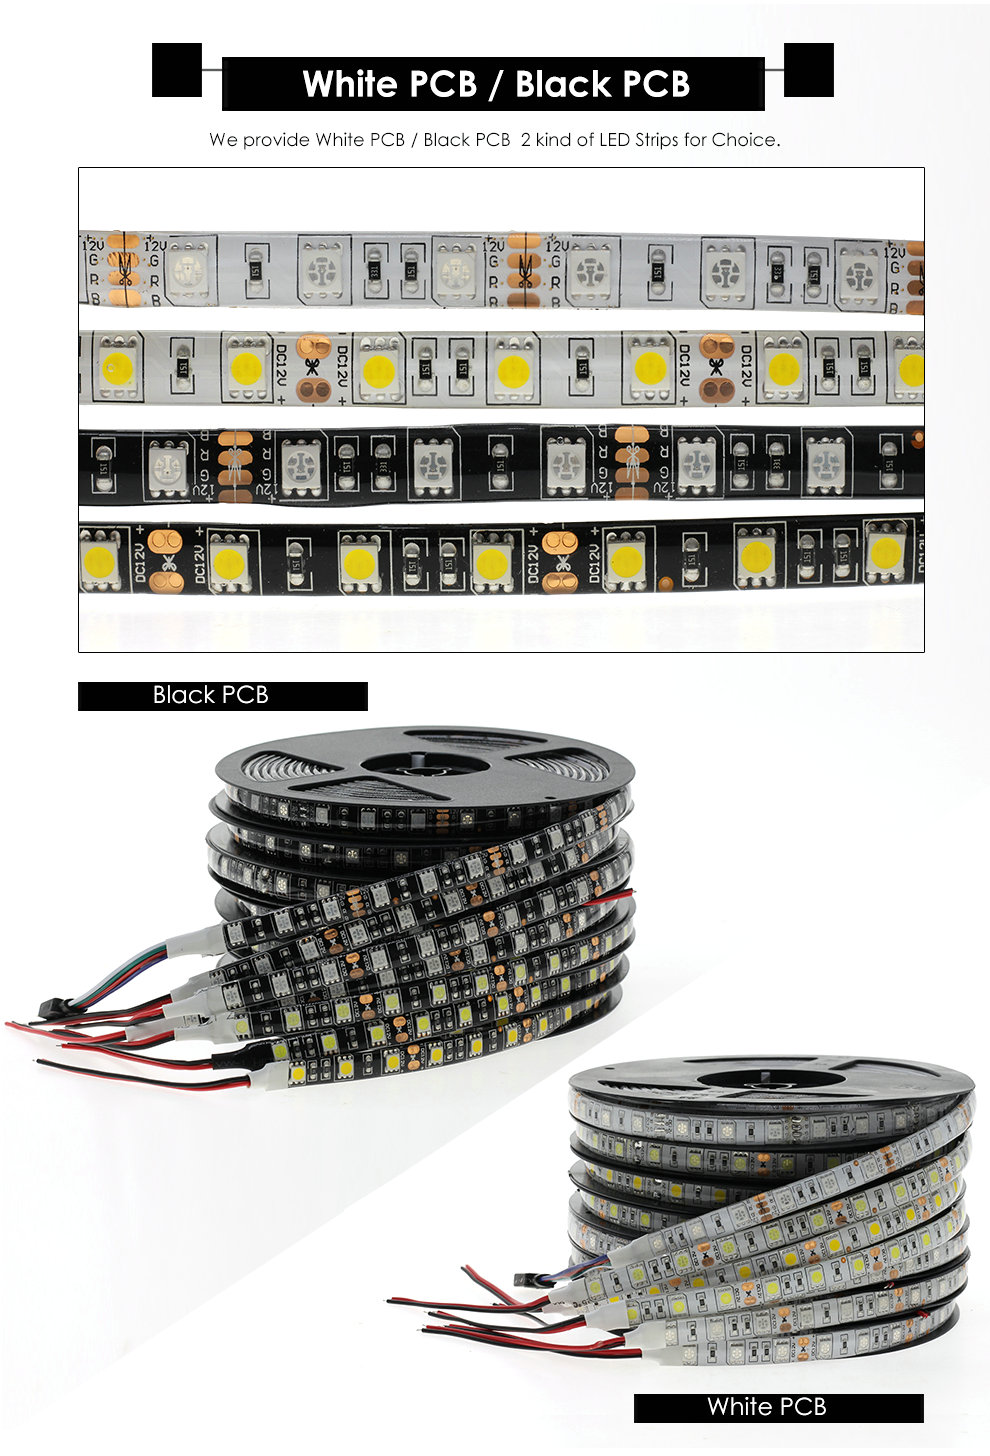 FEICAN LED Strip 5050 DC12V Flexible LED Light Black / White PCB No Waterproof Waterproof 60 LED/m 5M